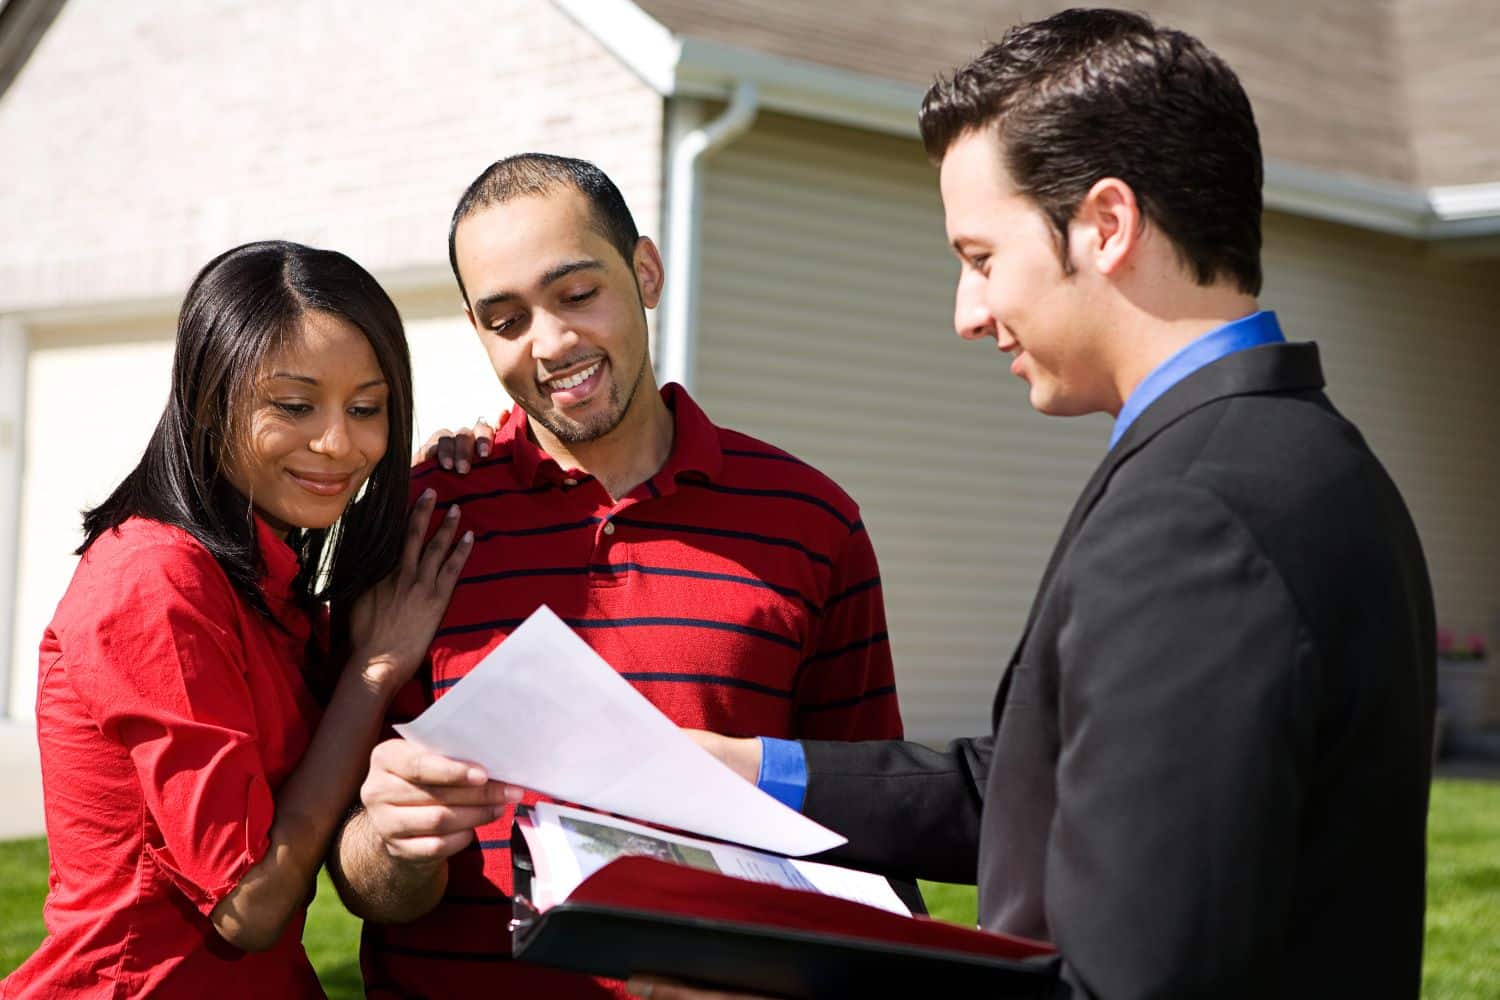 homebuyer sellers market preparation down payment real estate agent lender mortgage prequalified financial advisor